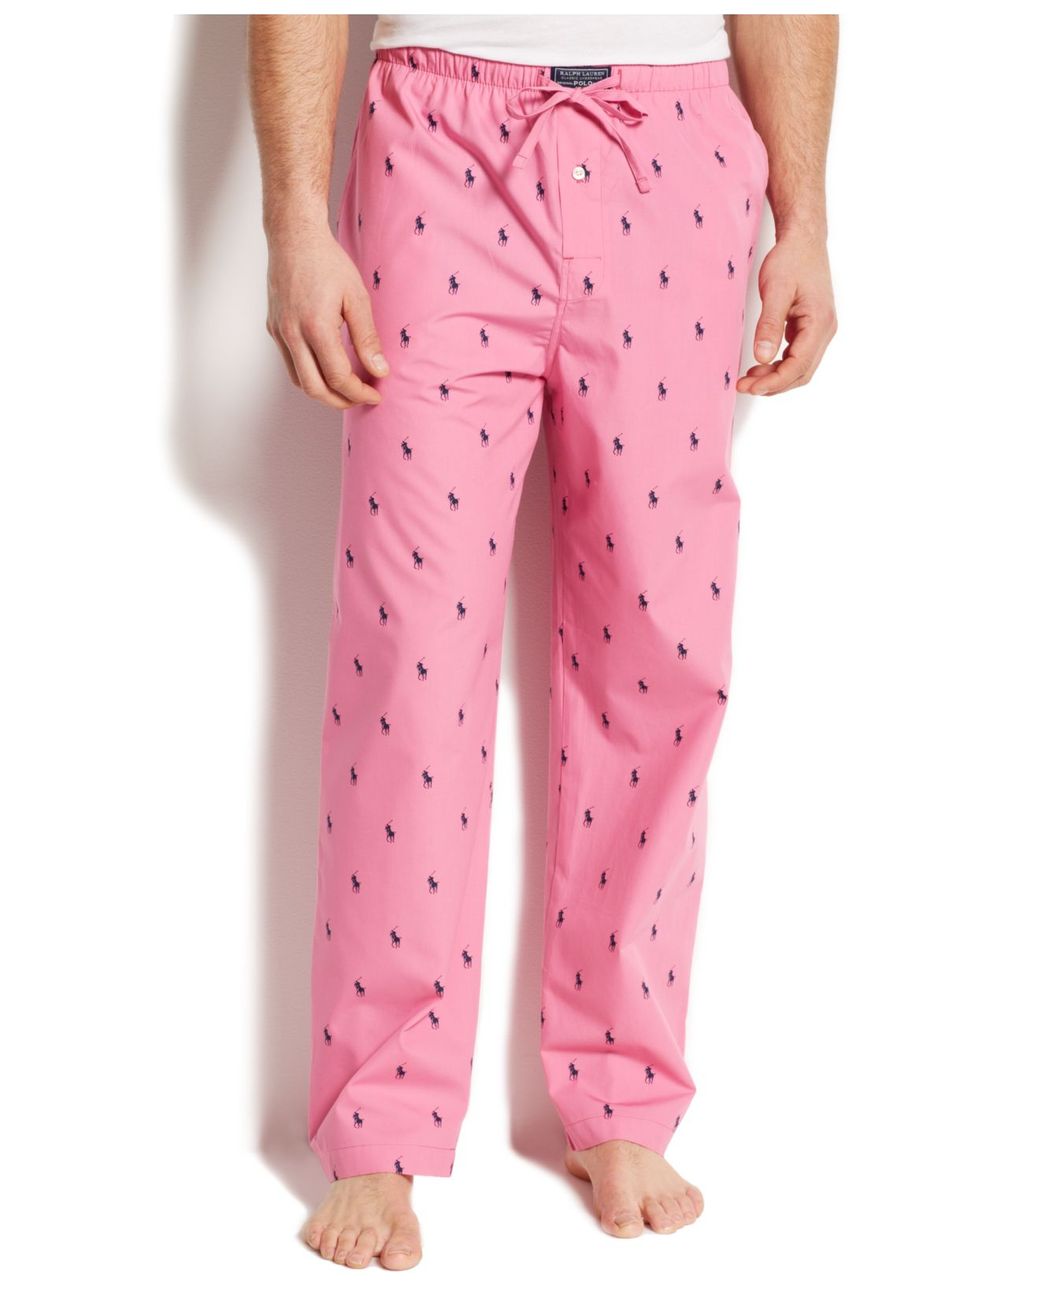 Allover Pony Print Pajama Pants